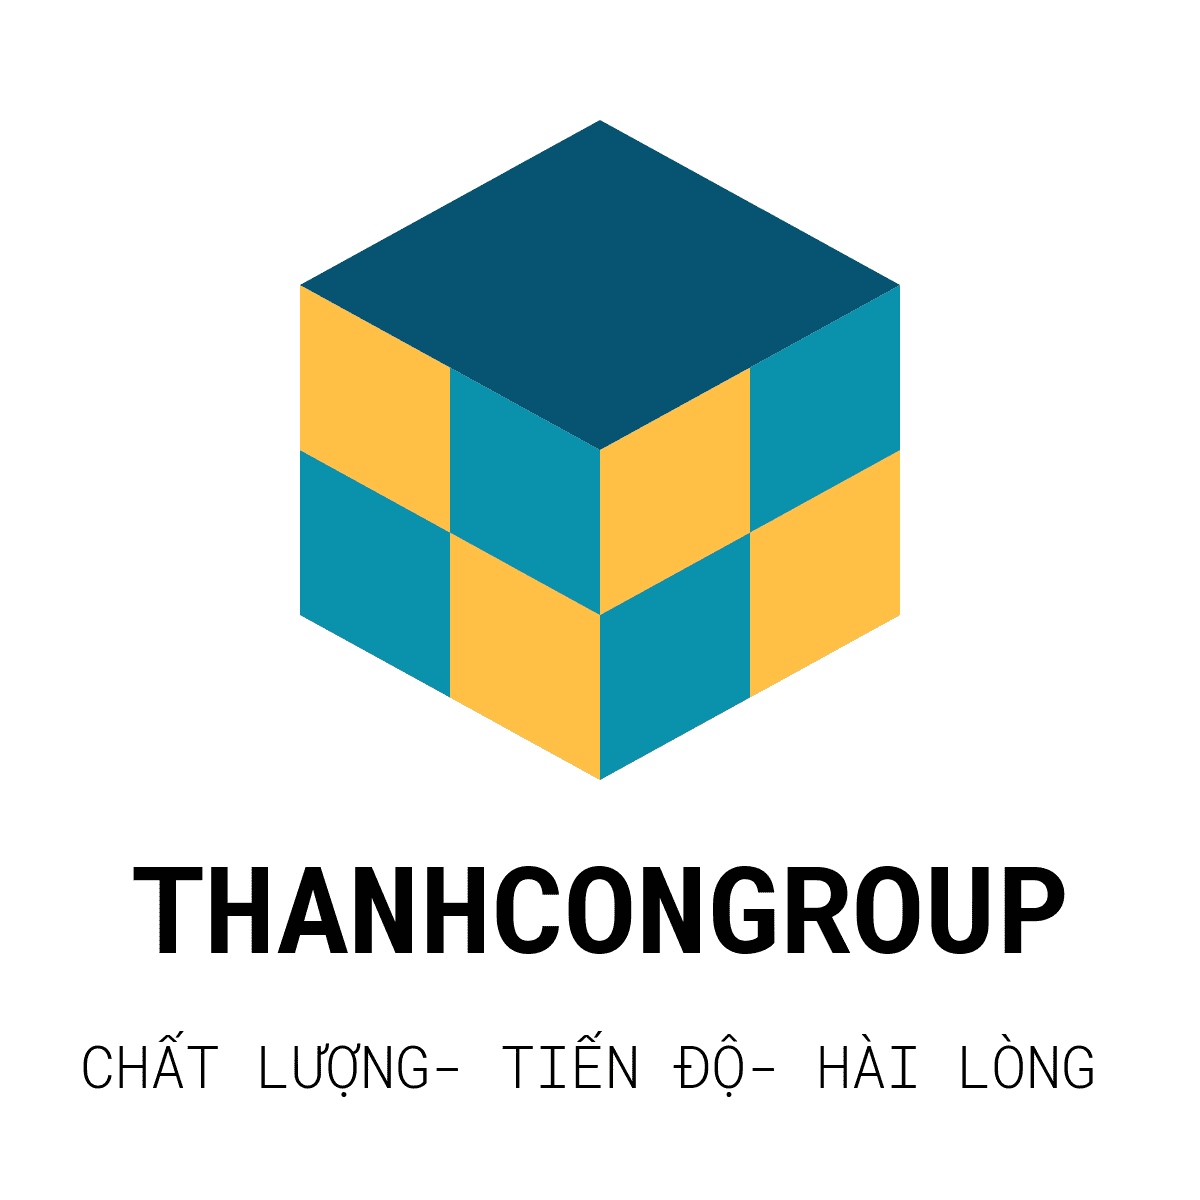 THANHCONGGROUP